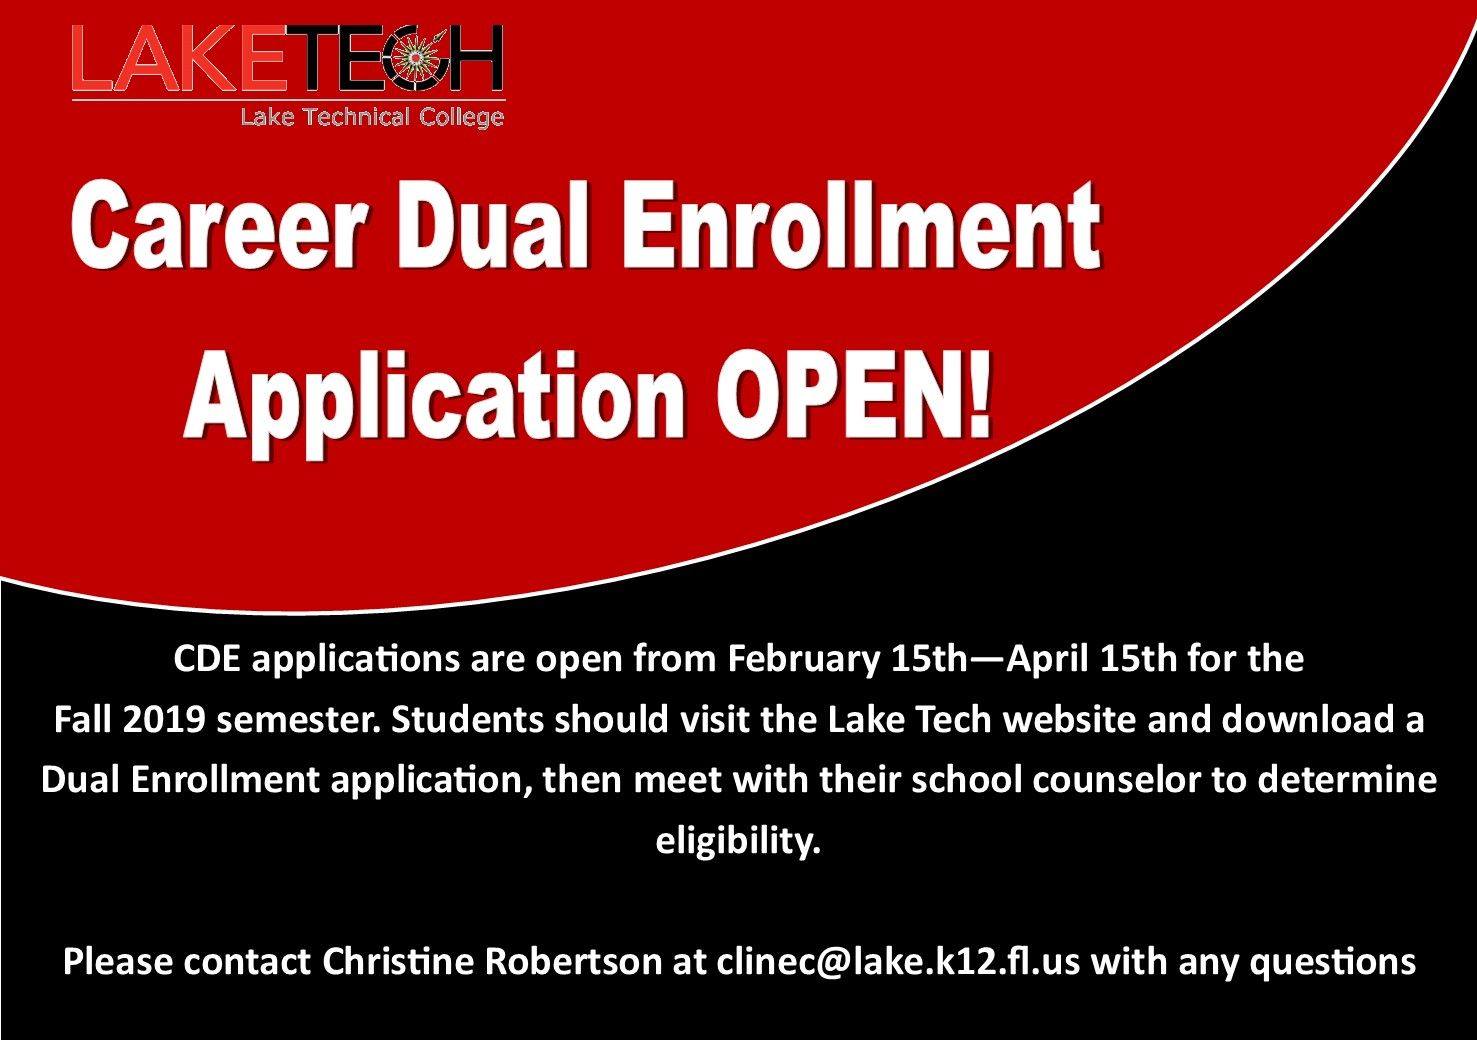 career dual enrollment Student Affairs 03/01/19